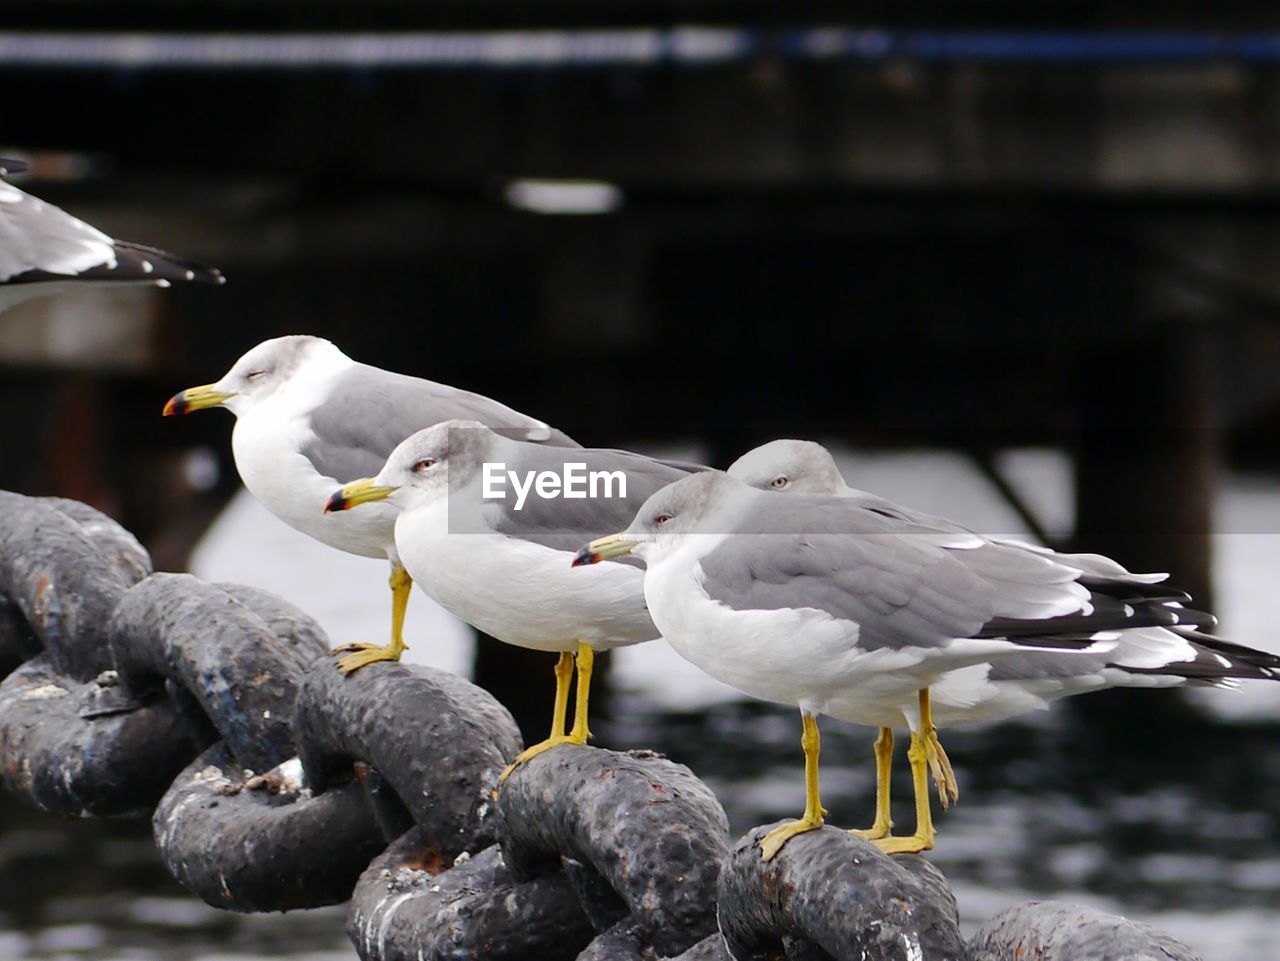 Seagulls perching on chain